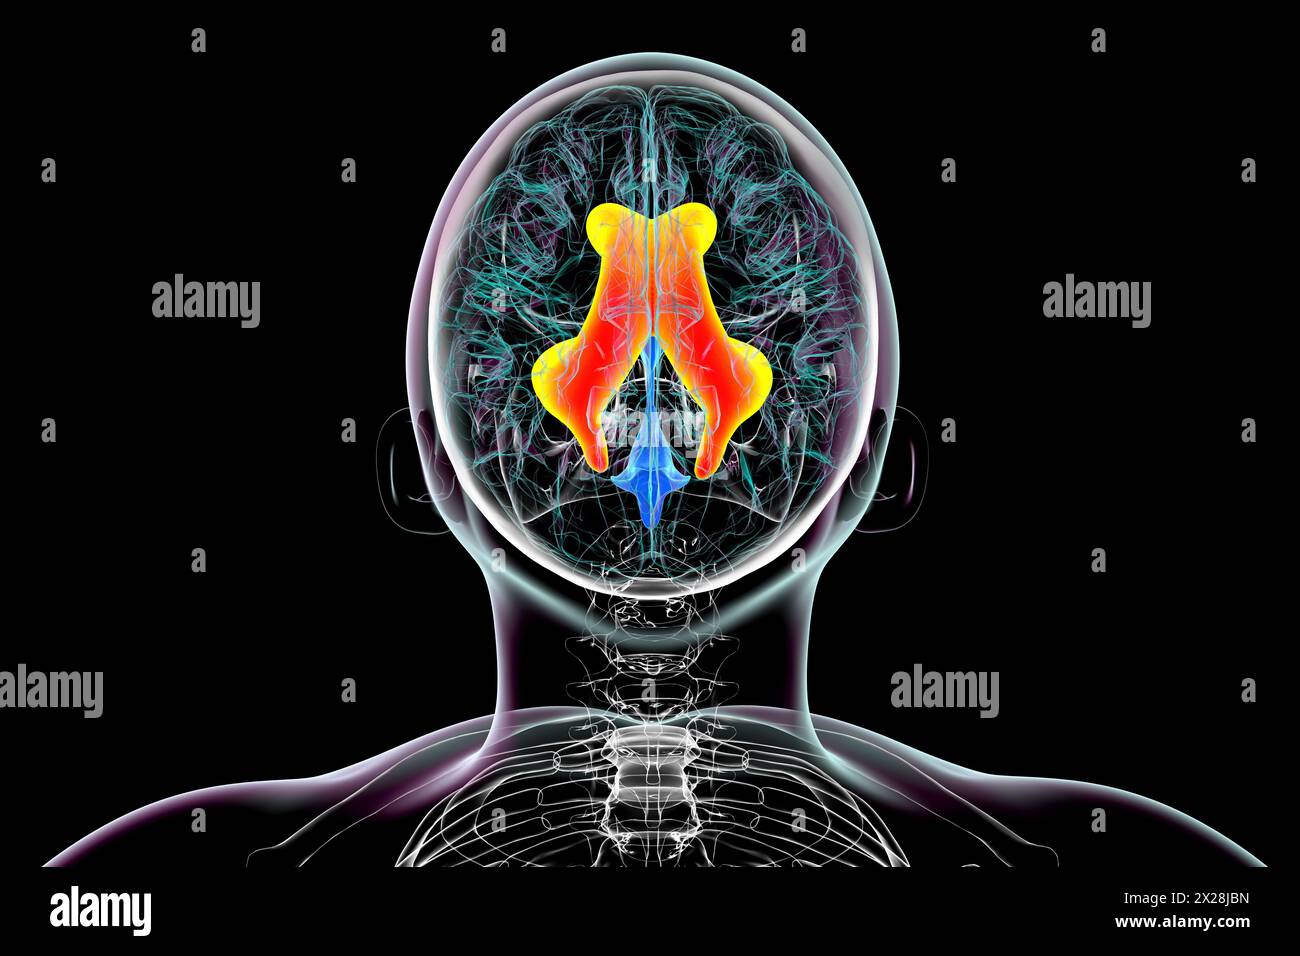 Vergrößerte laterale Ventrikel des Gehirns, Illustration Stockfoto